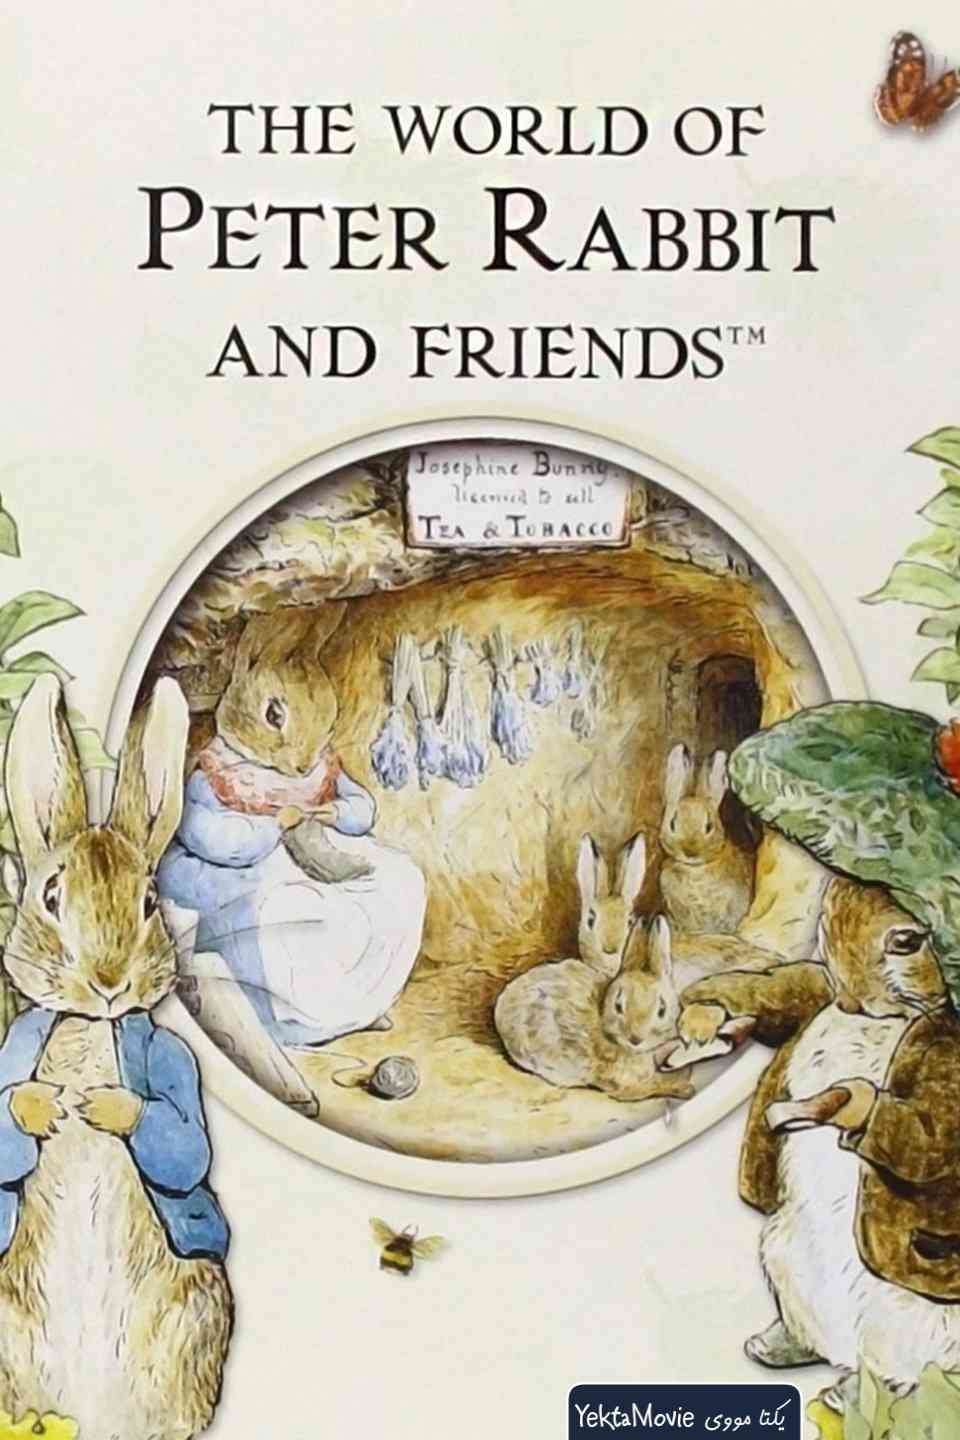 سریال The World of Peter Rabbit and Friends 1992 ( دنیای پیتر خرگوش و دوستان ۱۹۹۲ )